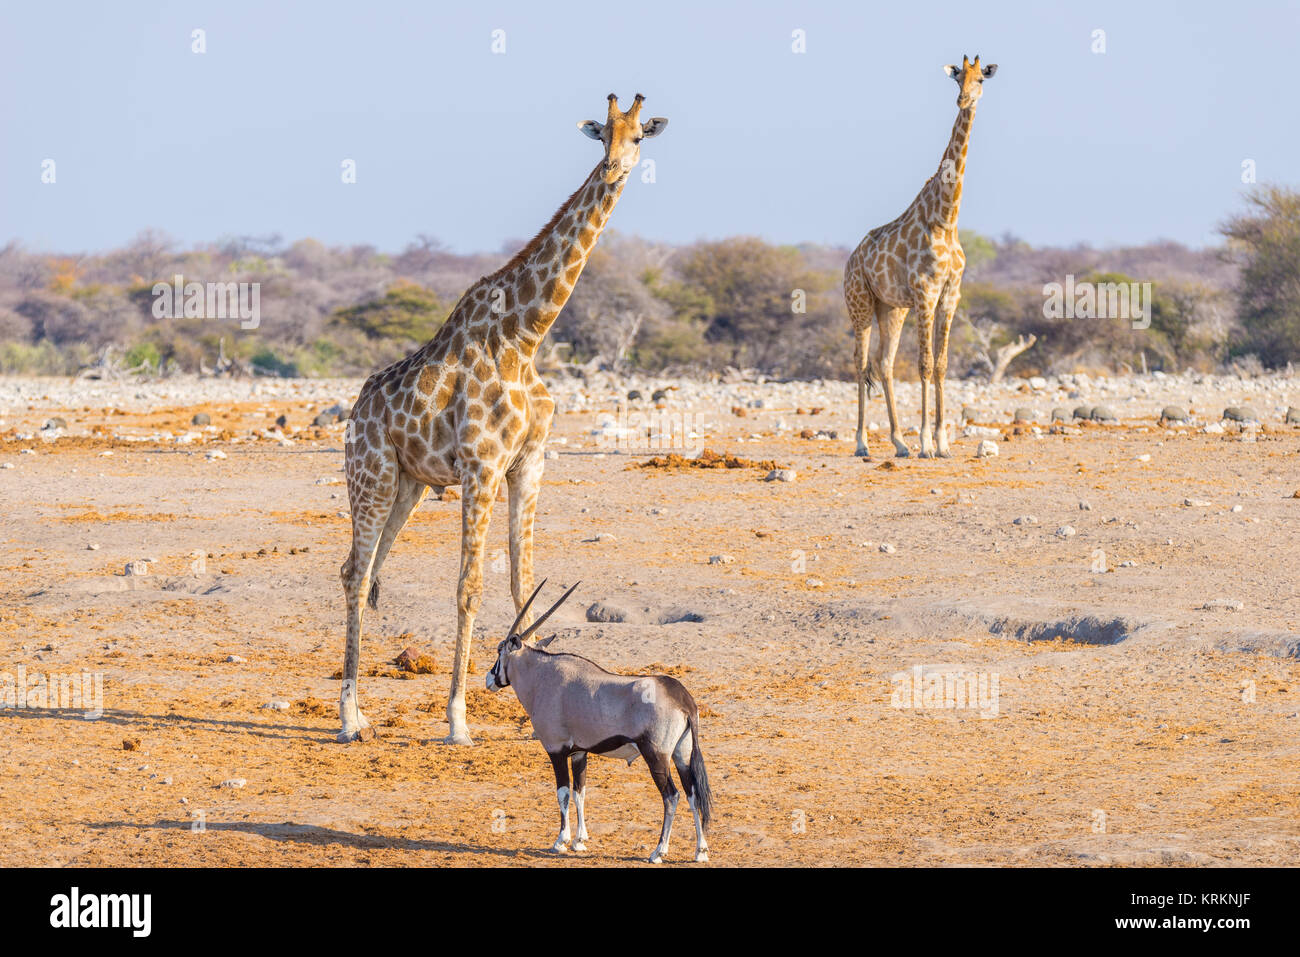 Giraffe walking in the bush on the desert pan. Wildlife Safari in the Etosha National Park, the main travel destination in Namibia, Africa. Stock Photo